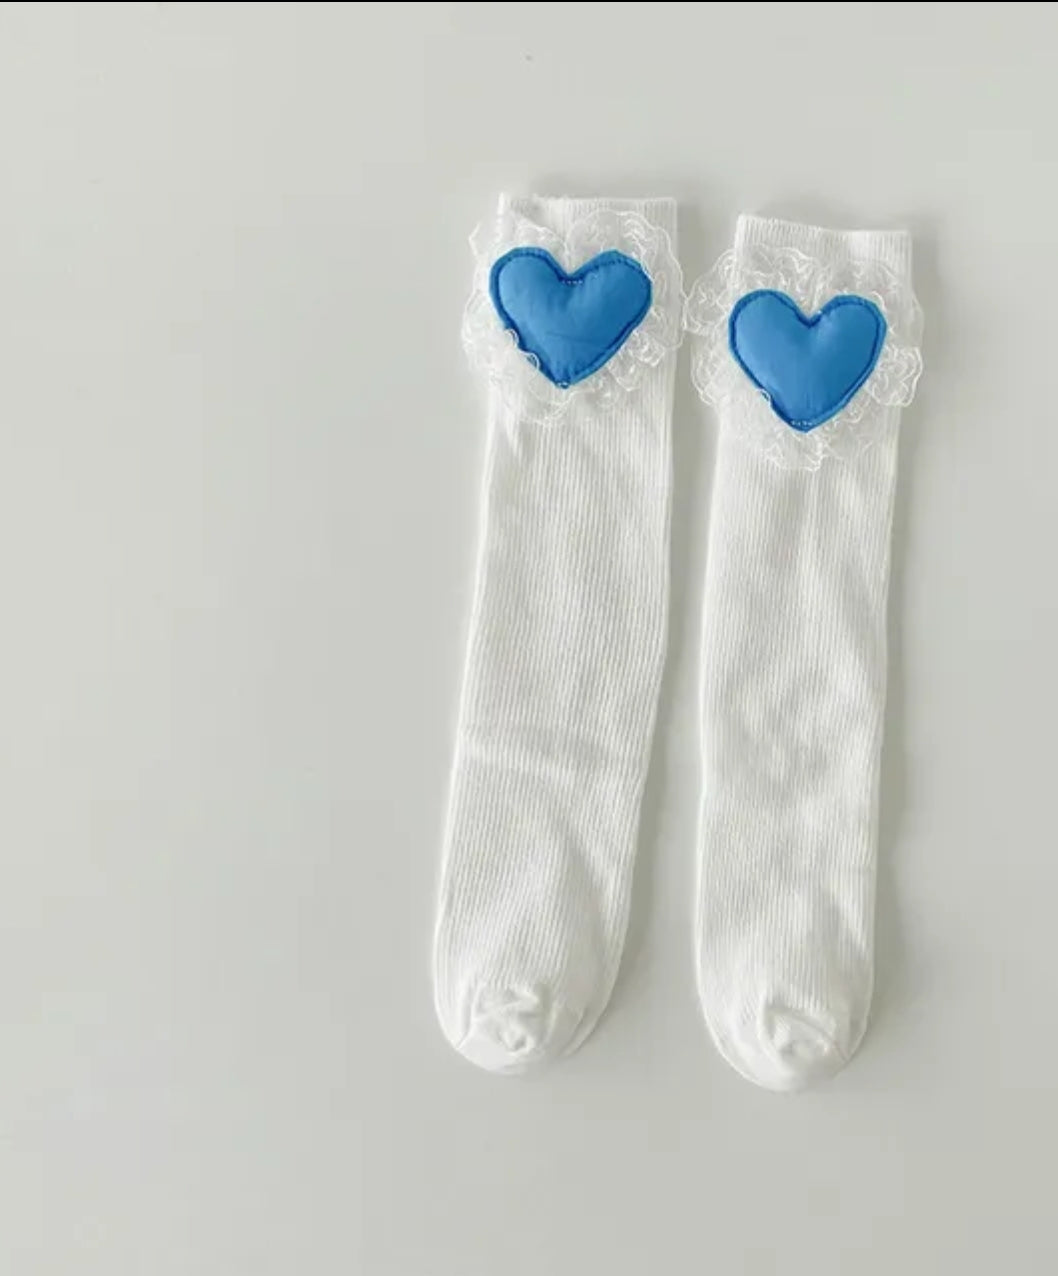 Care-a-lot heart socks